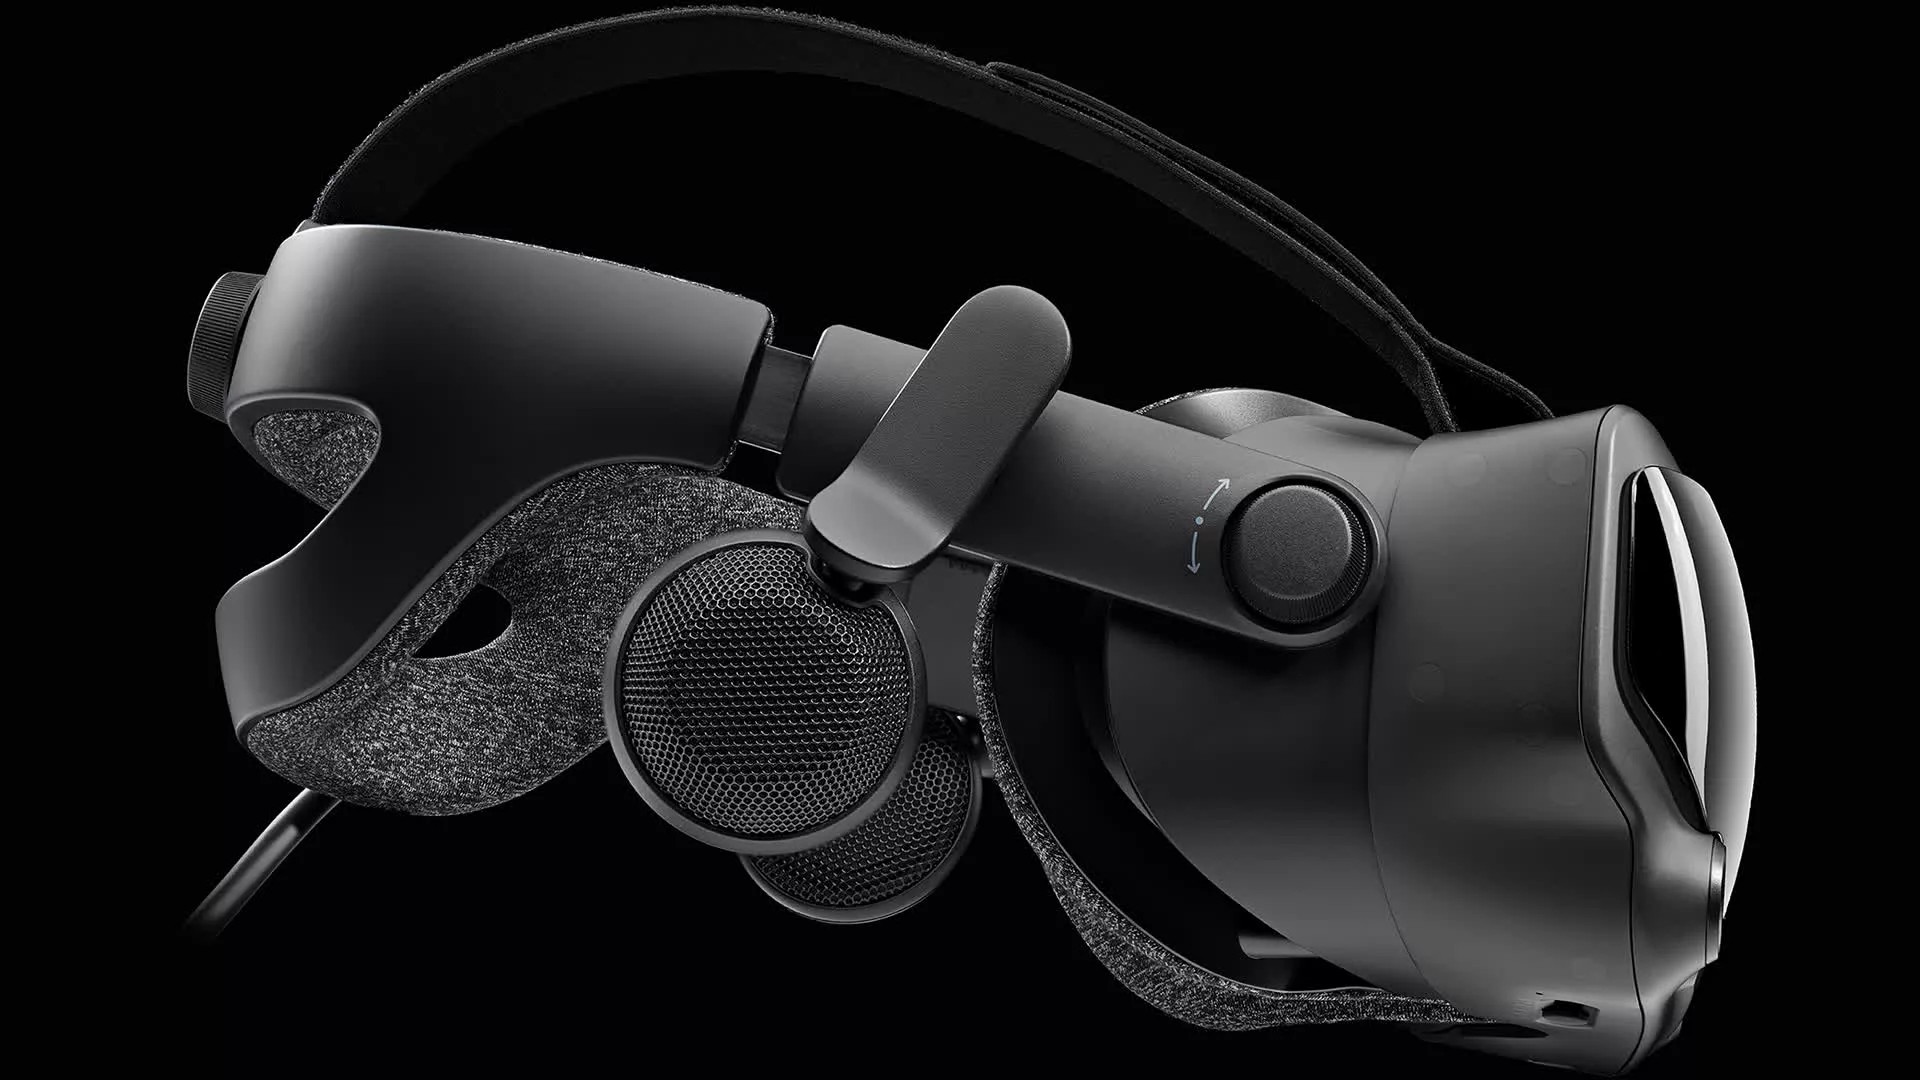 V社新VR頭顯設備專利曝光 或將與Quest競爭